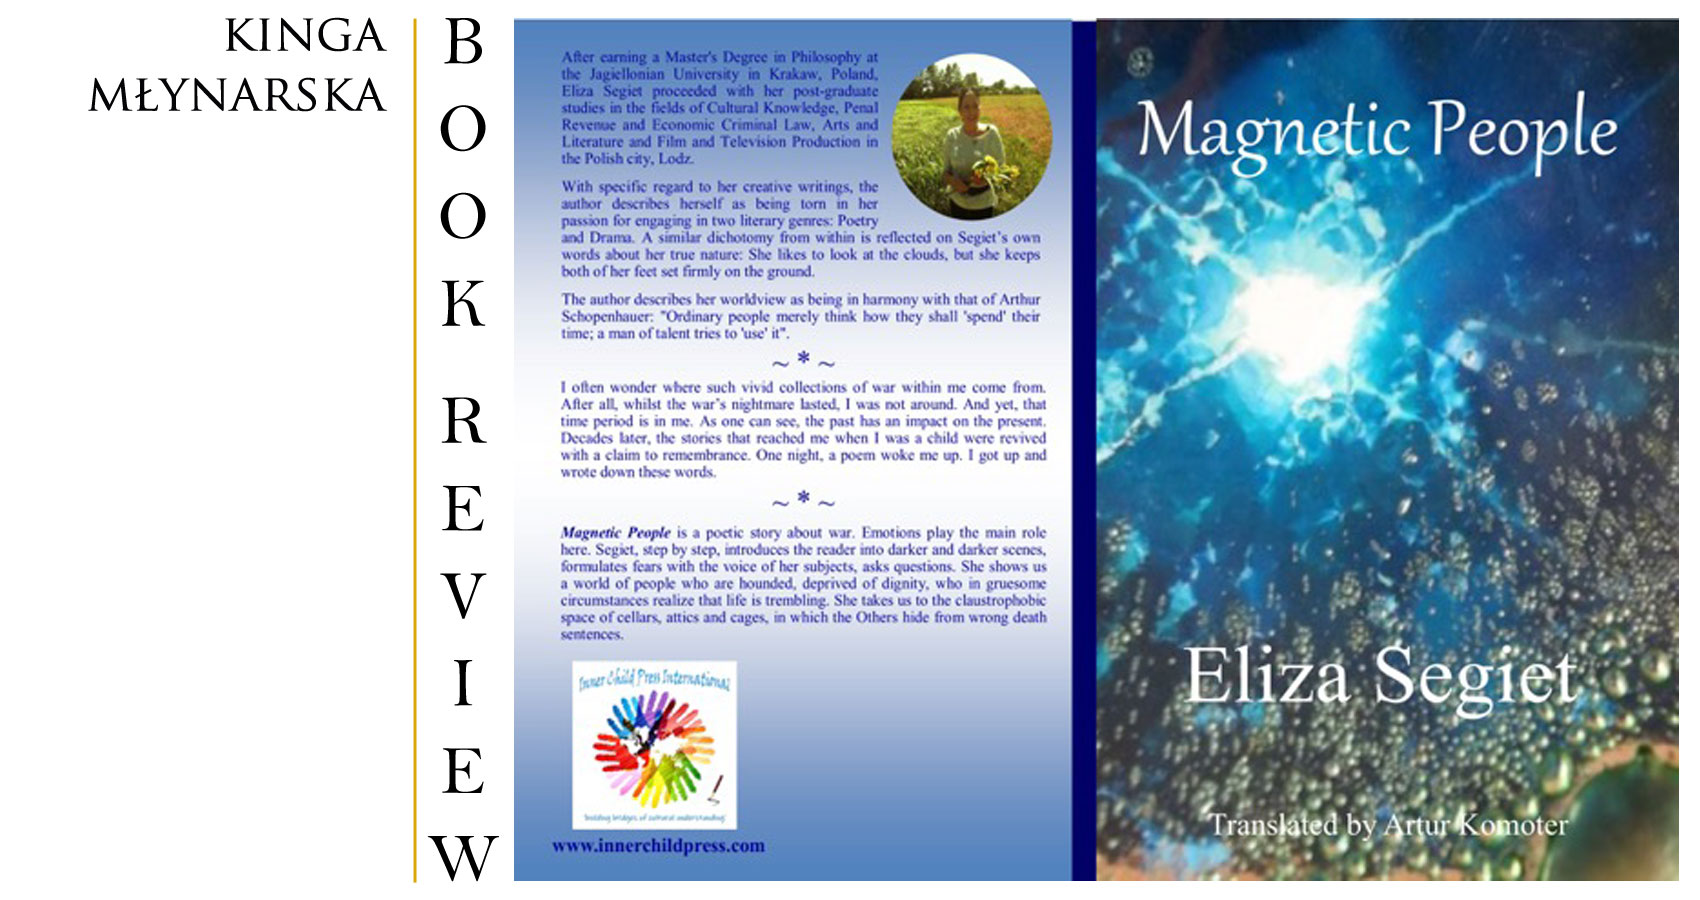 About Eliza Segiet's 'Magnetic People'', by Kinga Młynarska